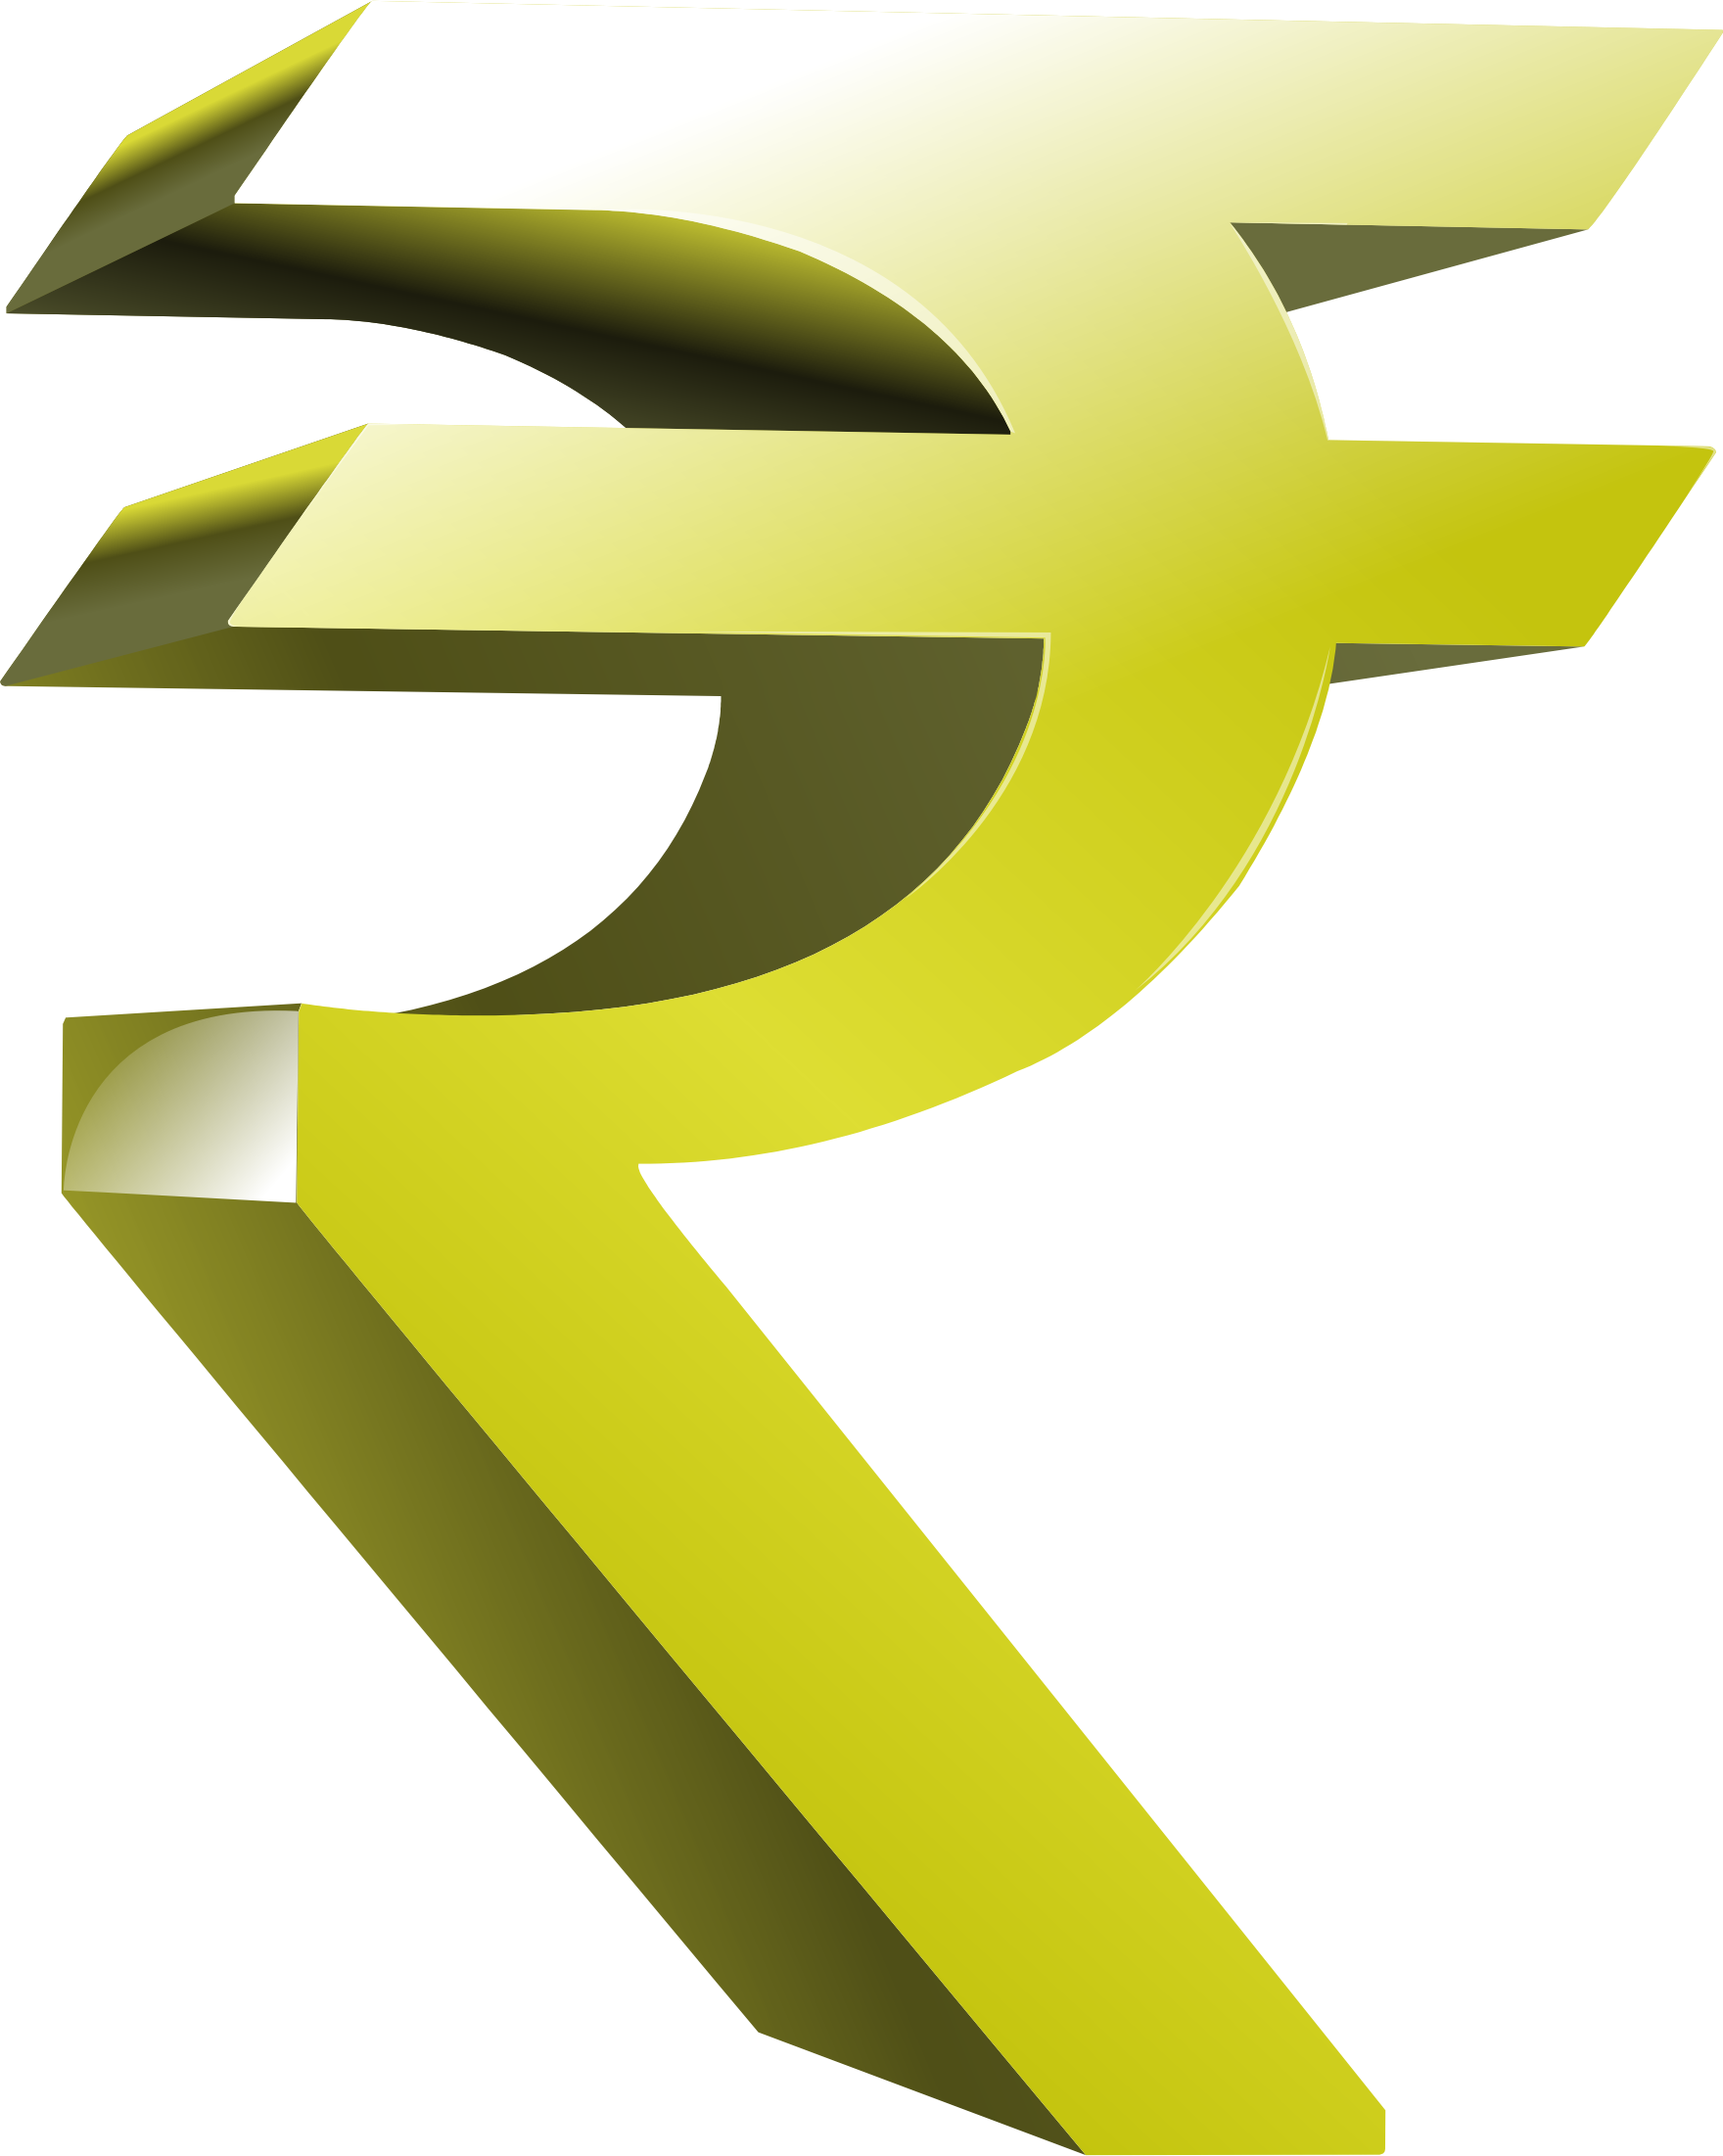 Download PNG image - Rupee Symbol Transparent PNG 